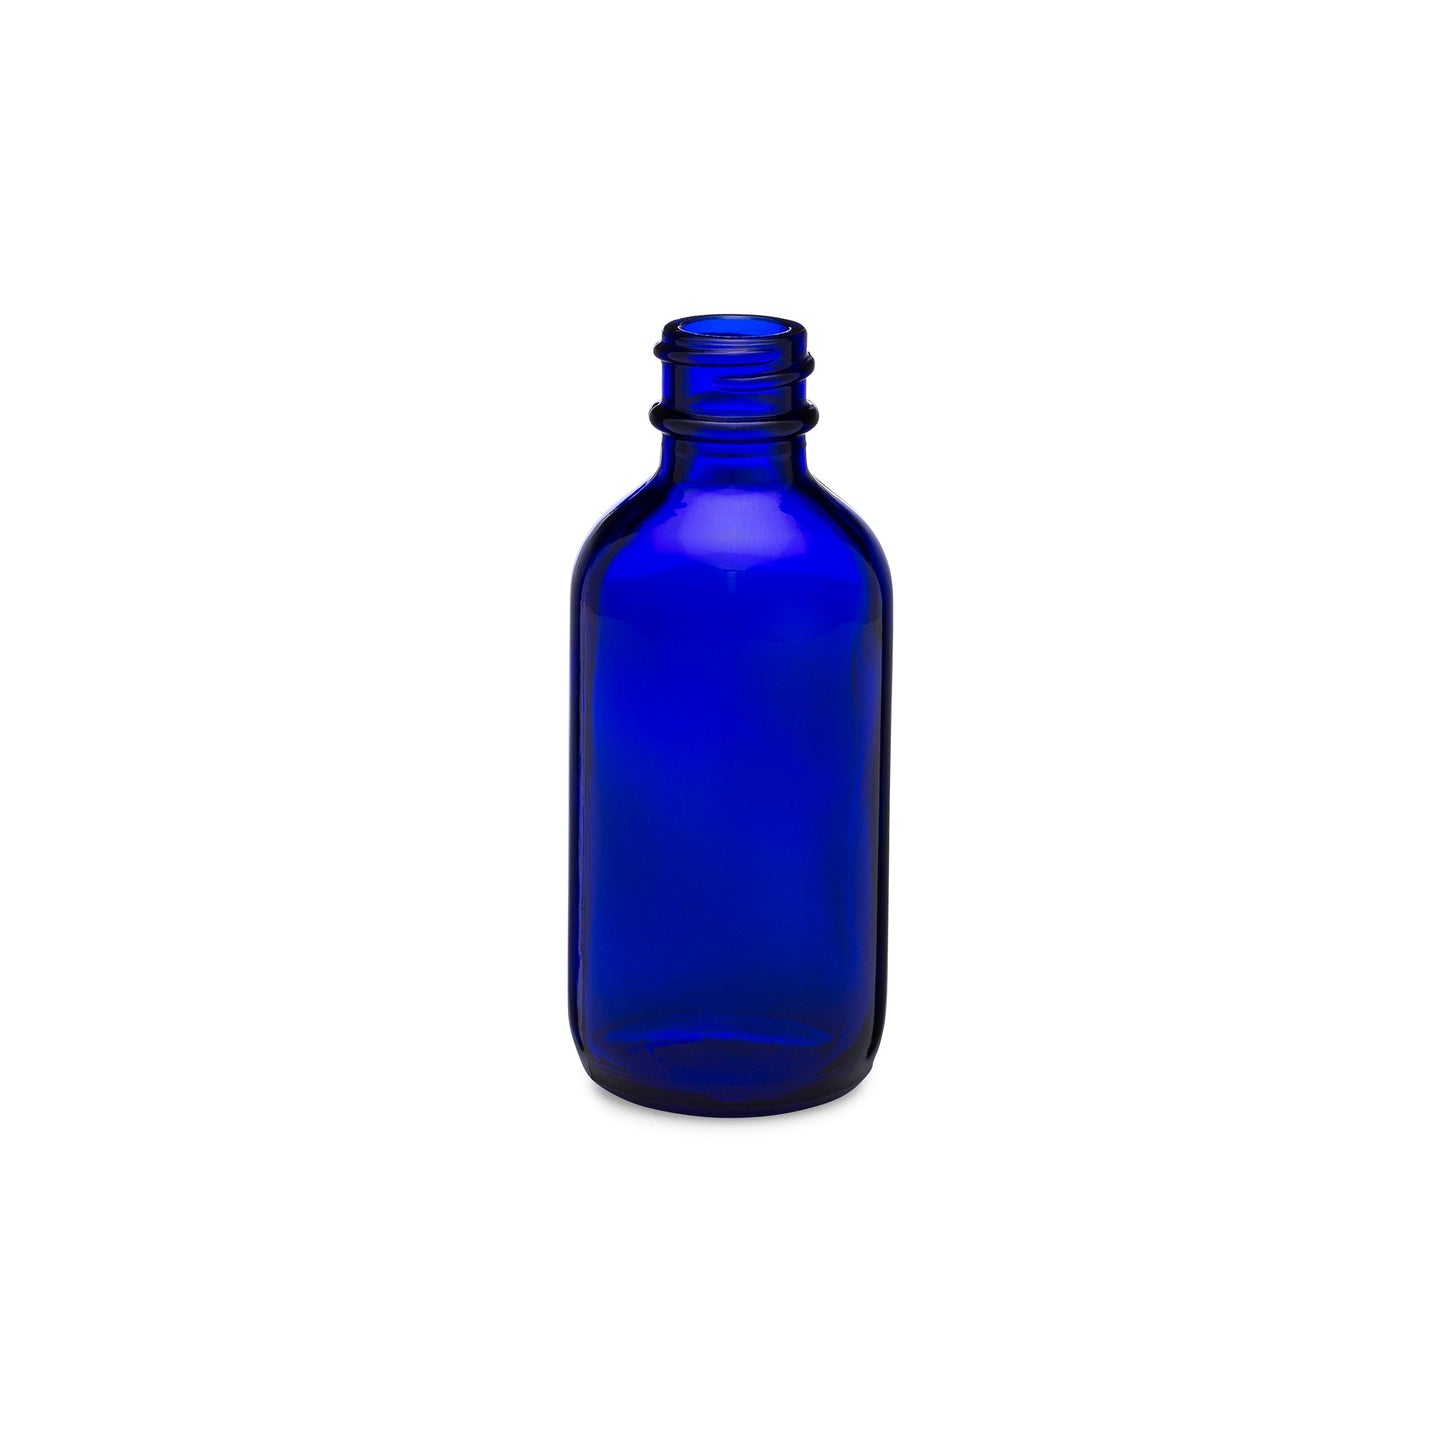 2 oz Blue Glass Boston Round Bottles (6-Pack)